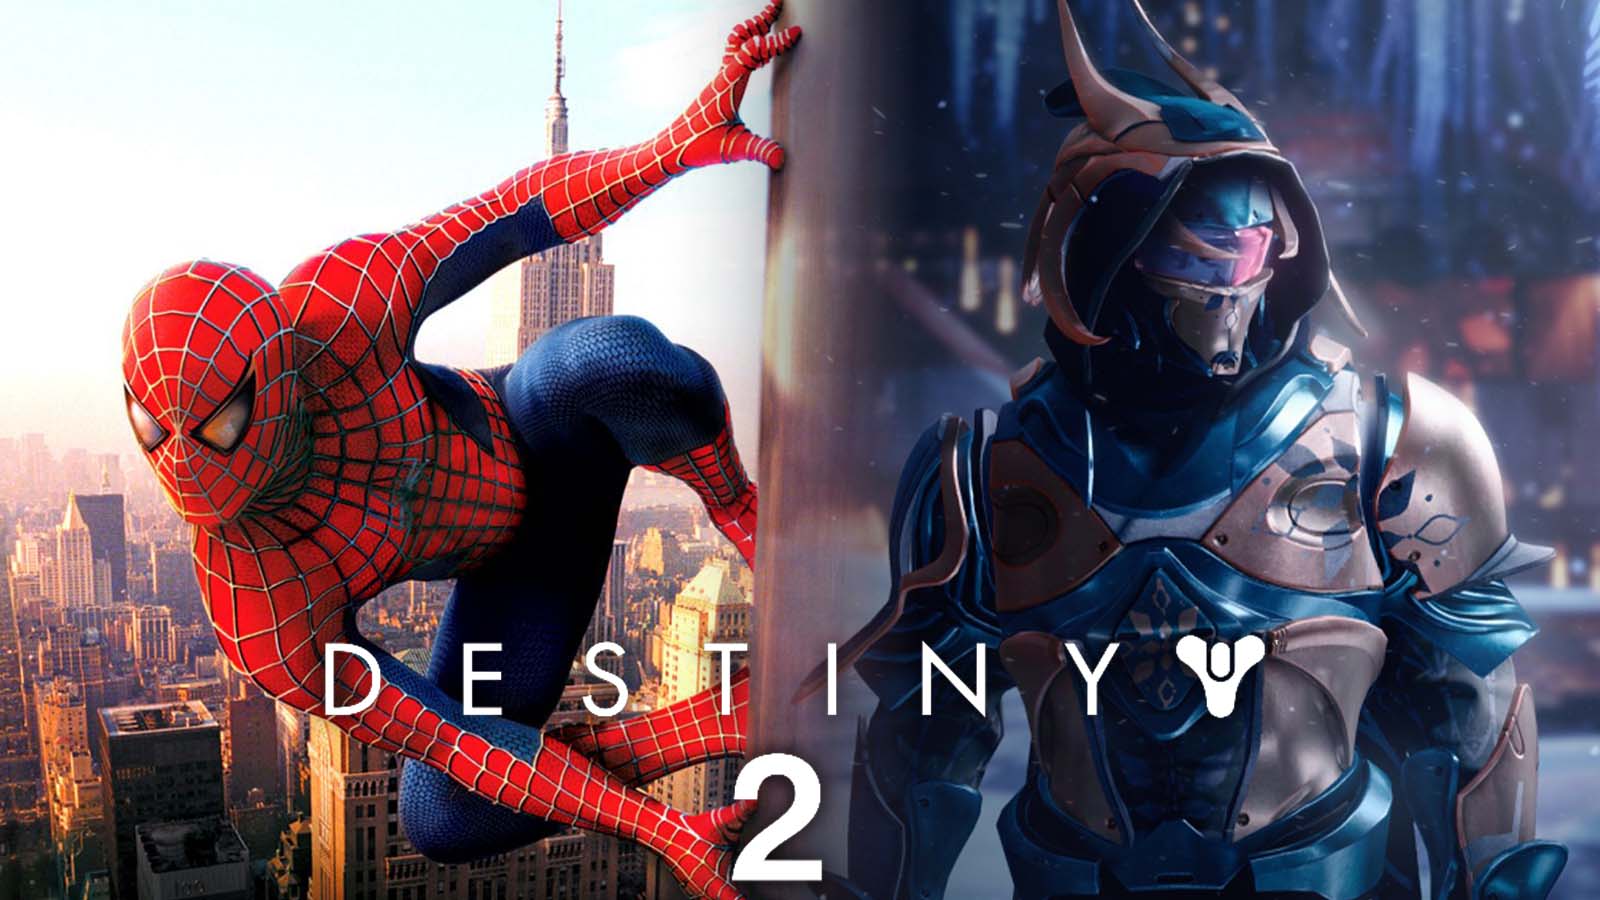 Destiny 2 Spider-Man crossover